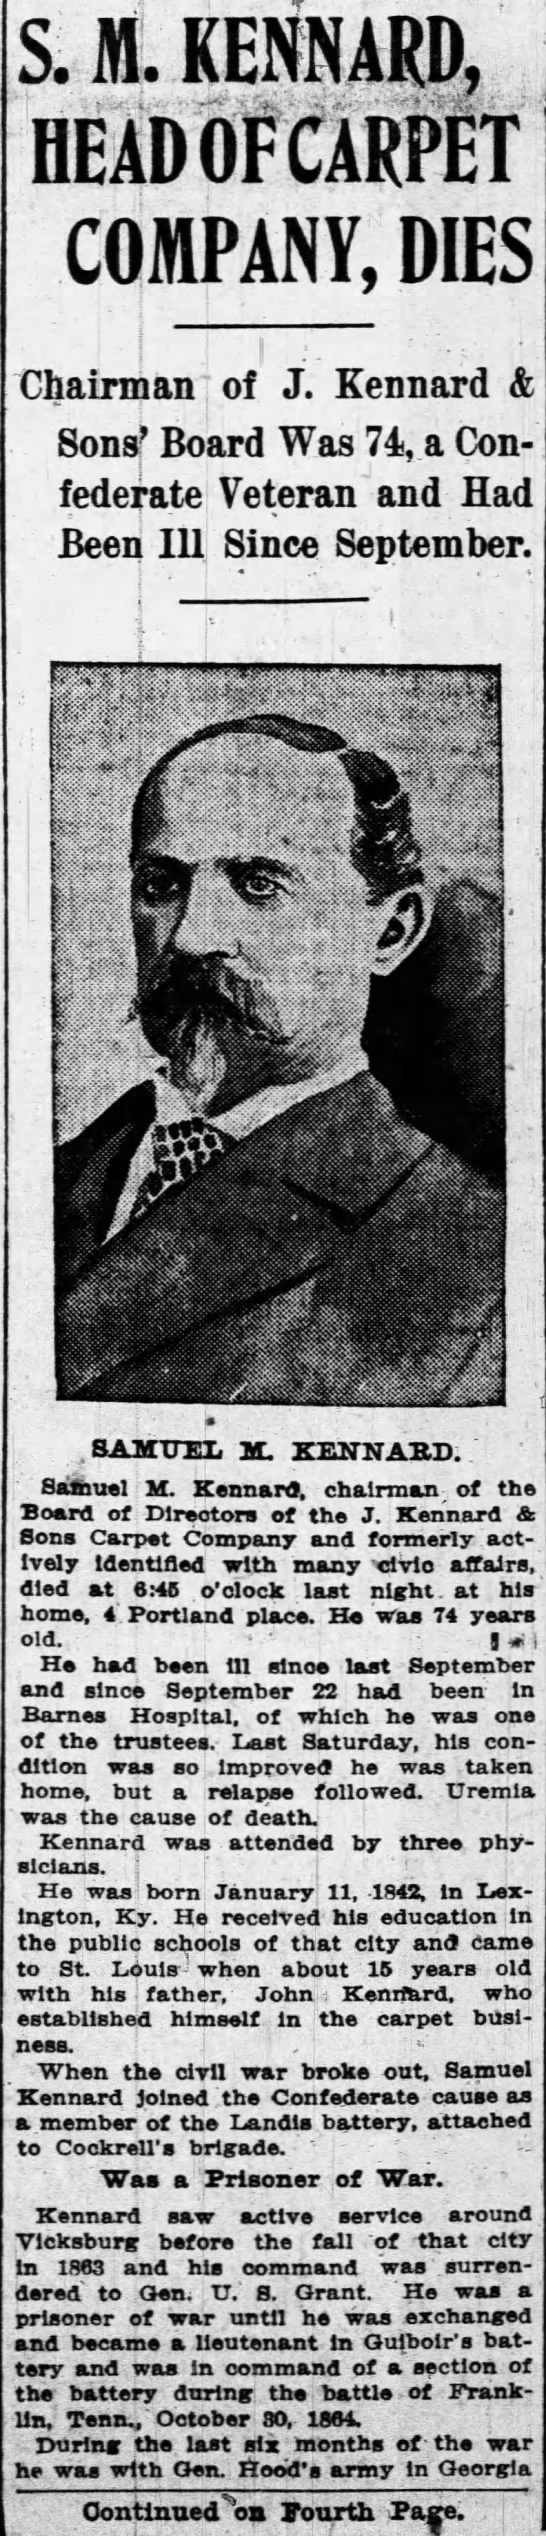 S. M. Kennard, Head of Carpet Company, Dies - 